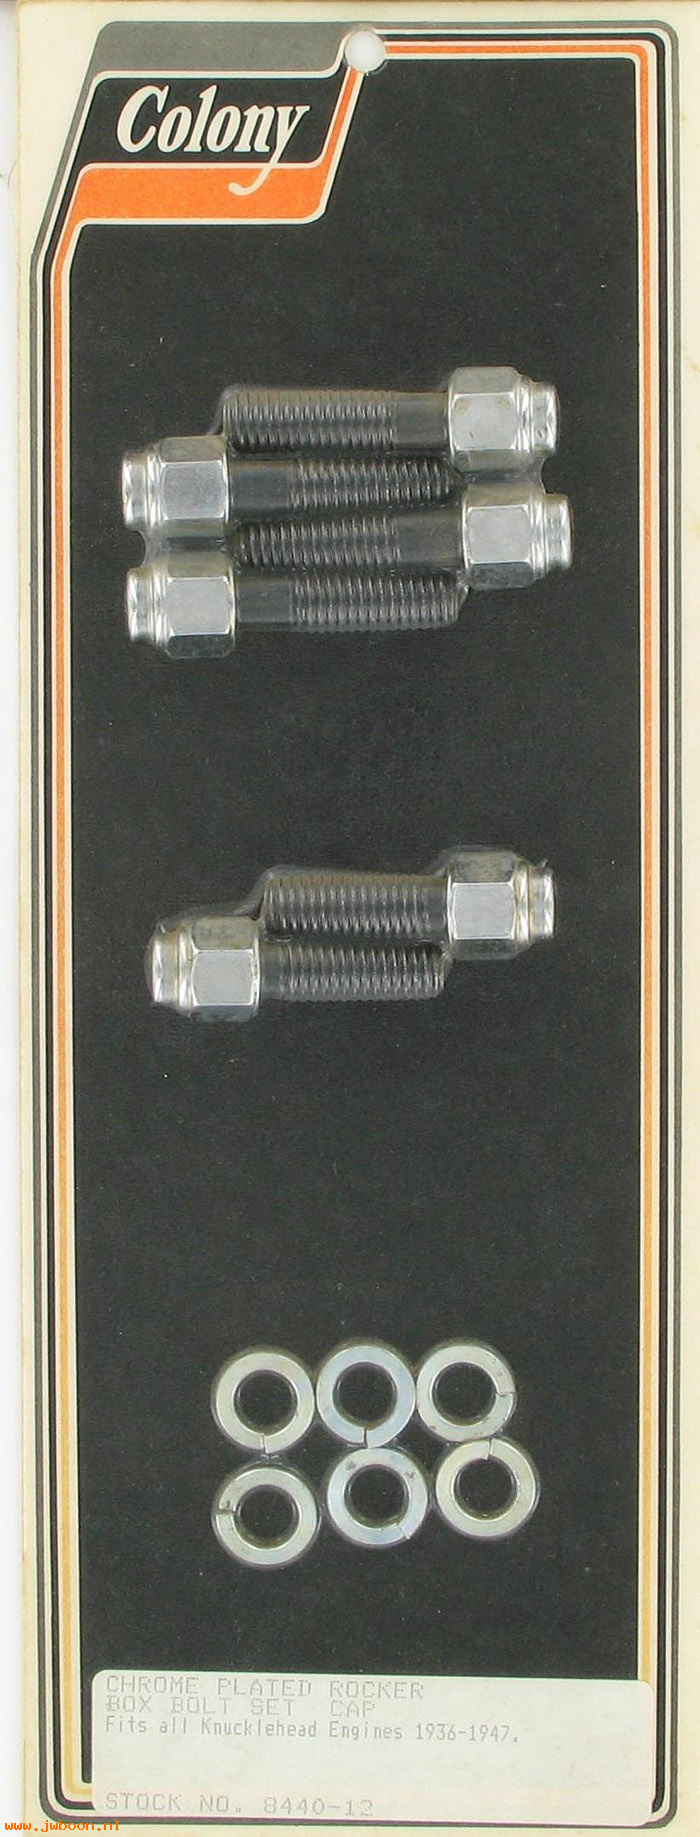 C 8440-12 (): Rocker box bolt kit - EL, FL '36-'47, Colony in stock